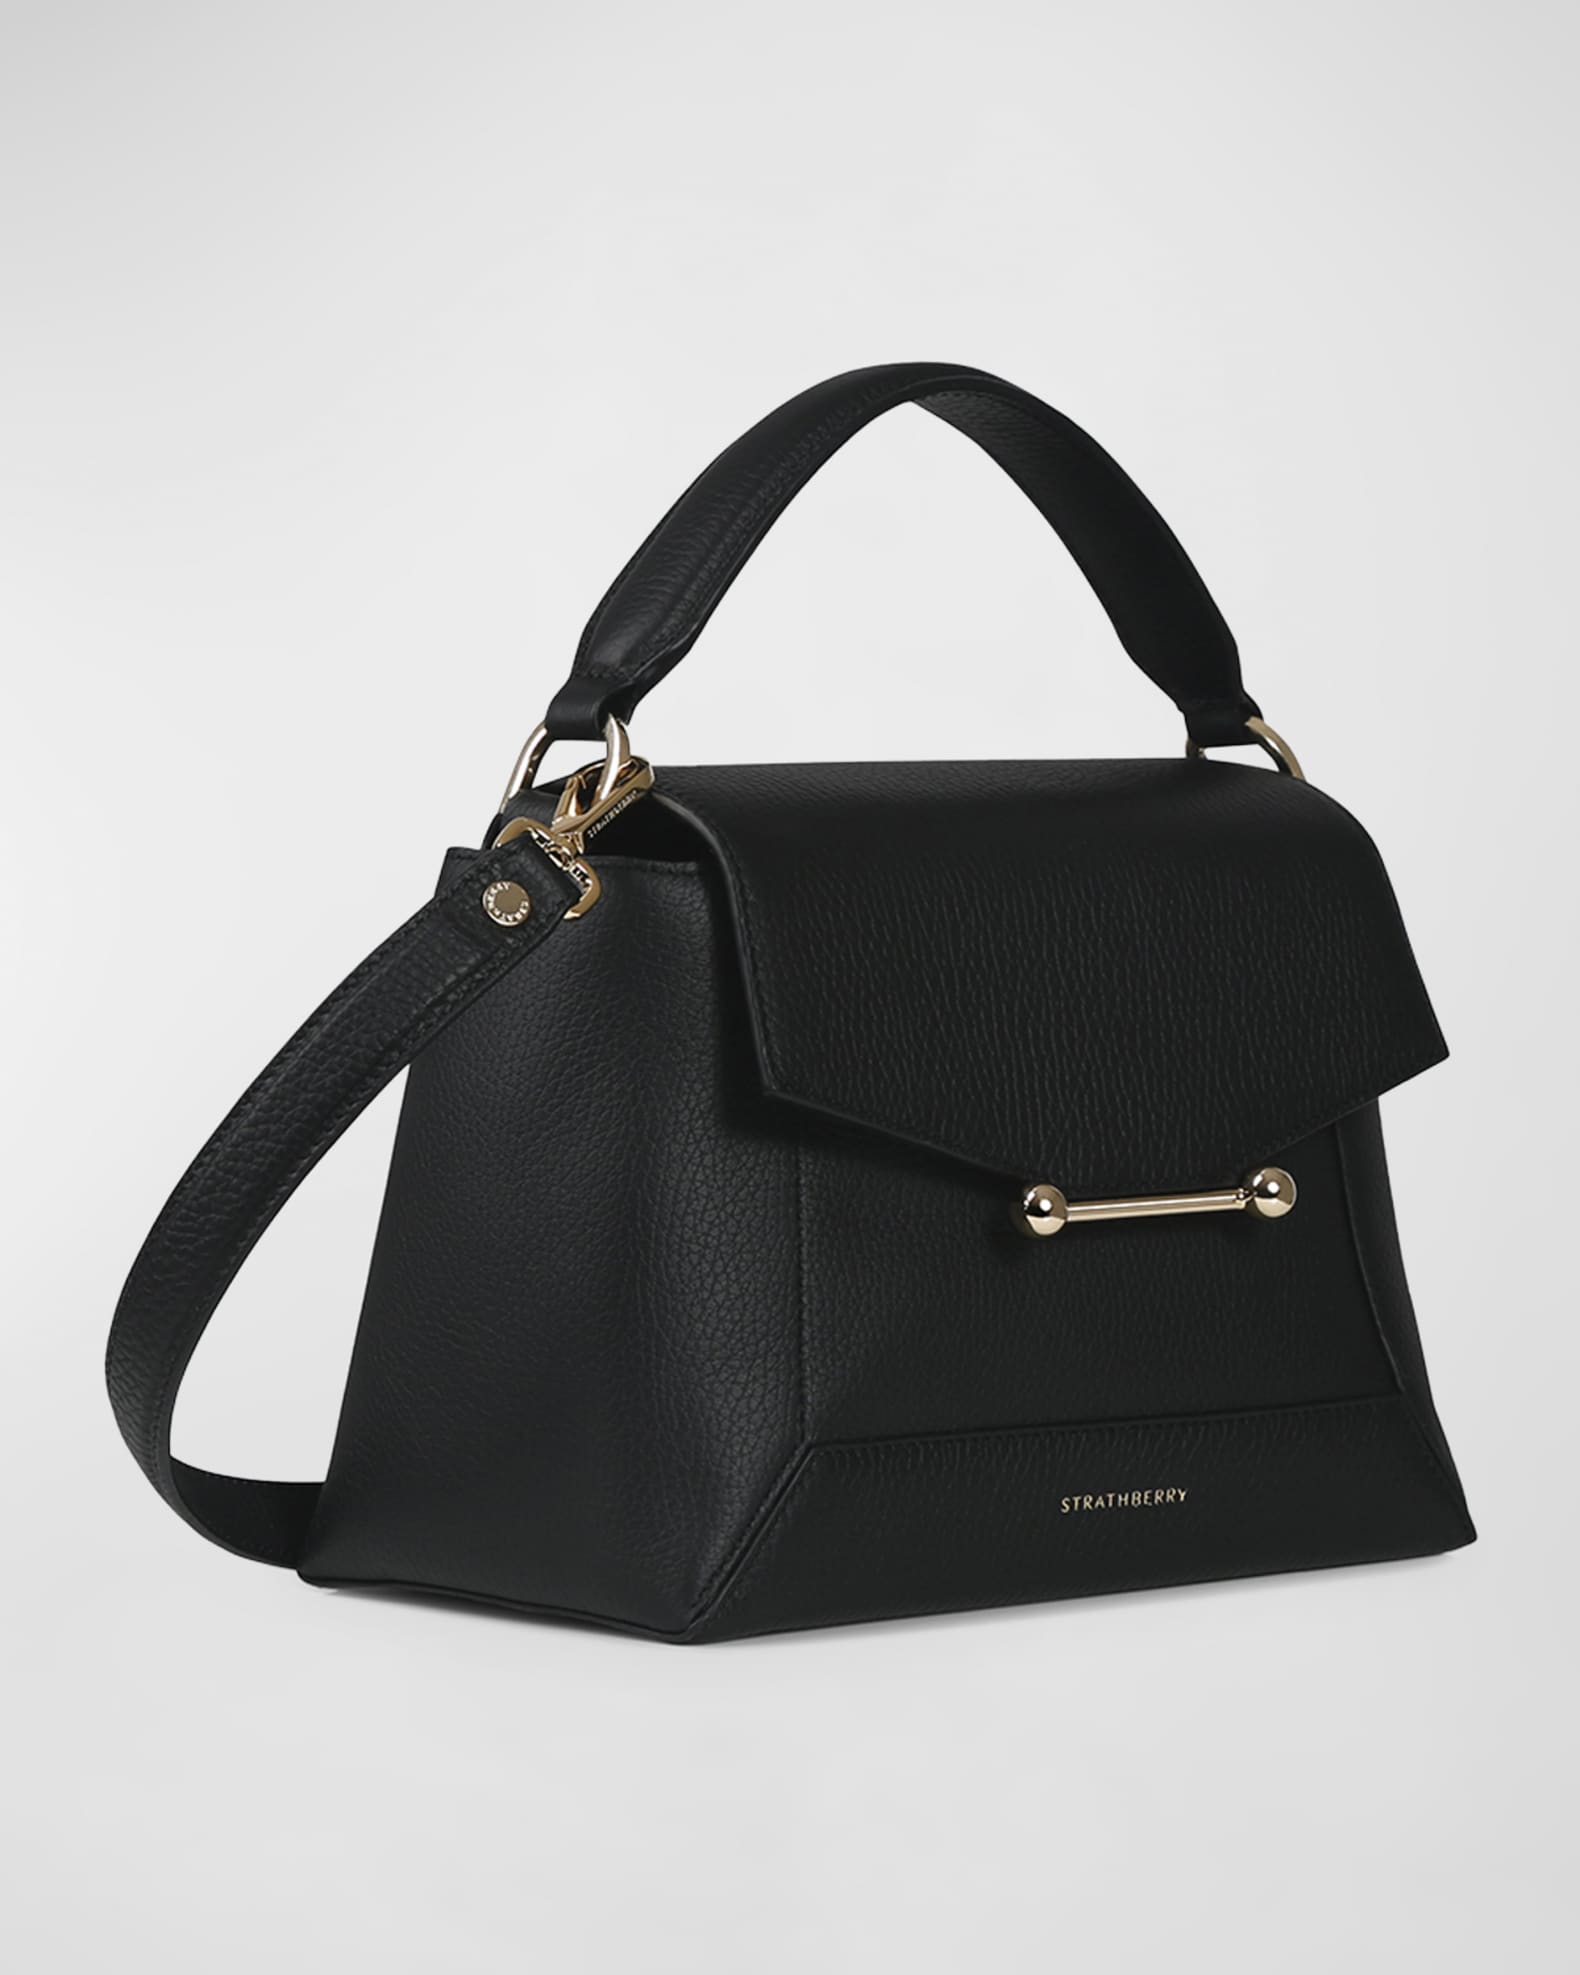 Strathberry Leather Handle Bag - Green Handle Bags, Handbags - STRAT21029